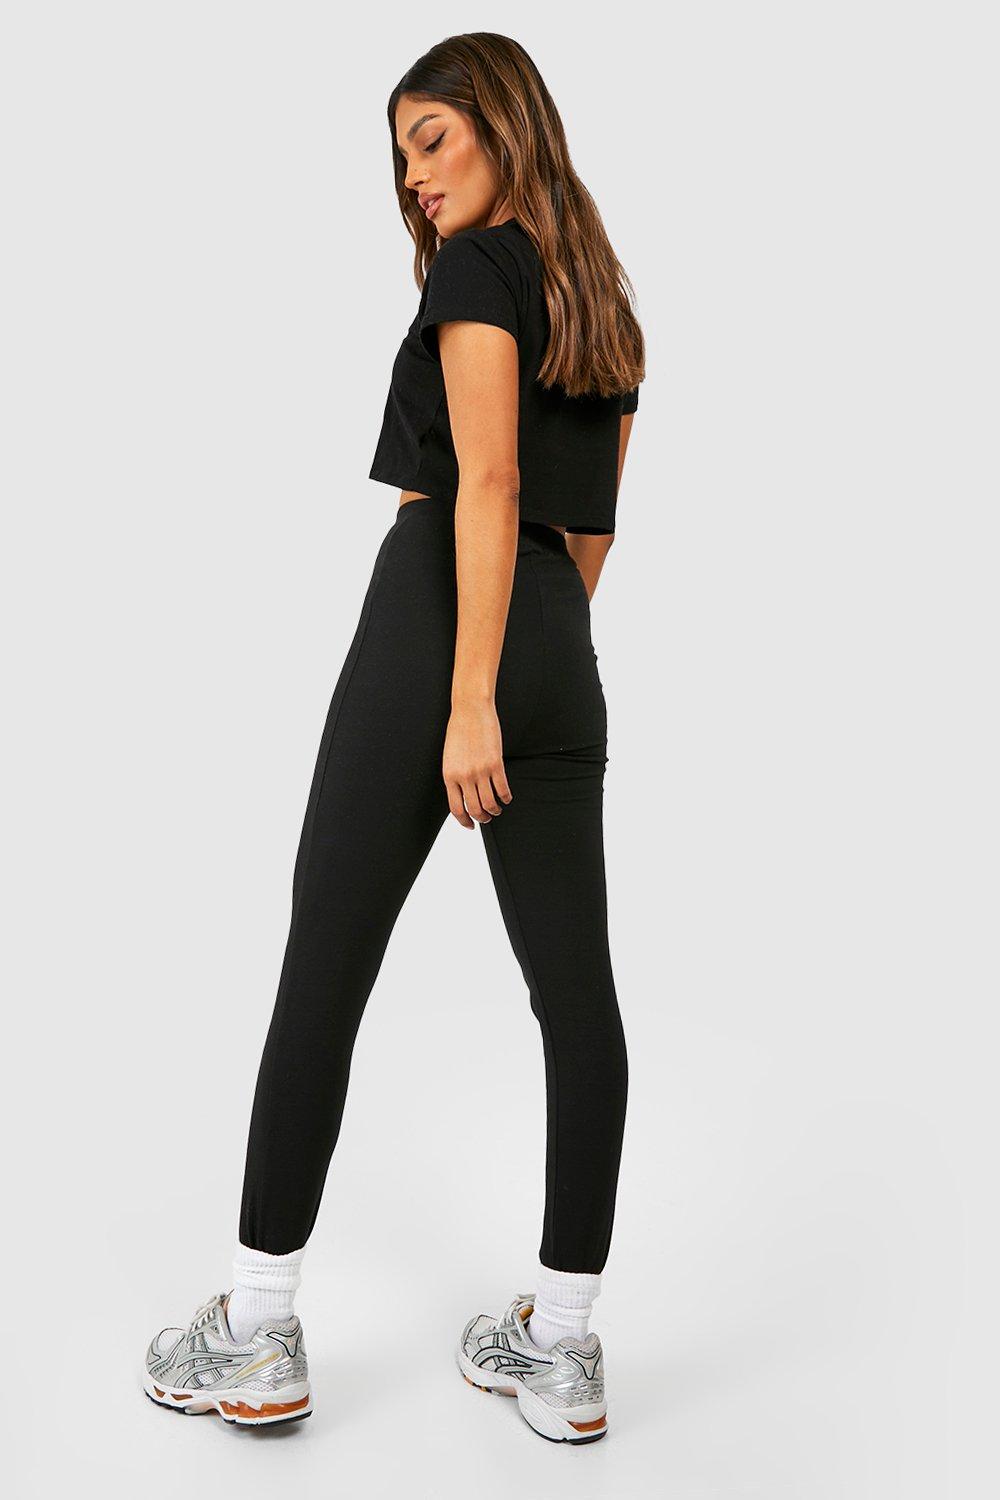 https://media.boohoo.com/i/boohoo/gzz48946_black_xl_1/female-black-cotton-3-pack-black-high-waisted-leggings